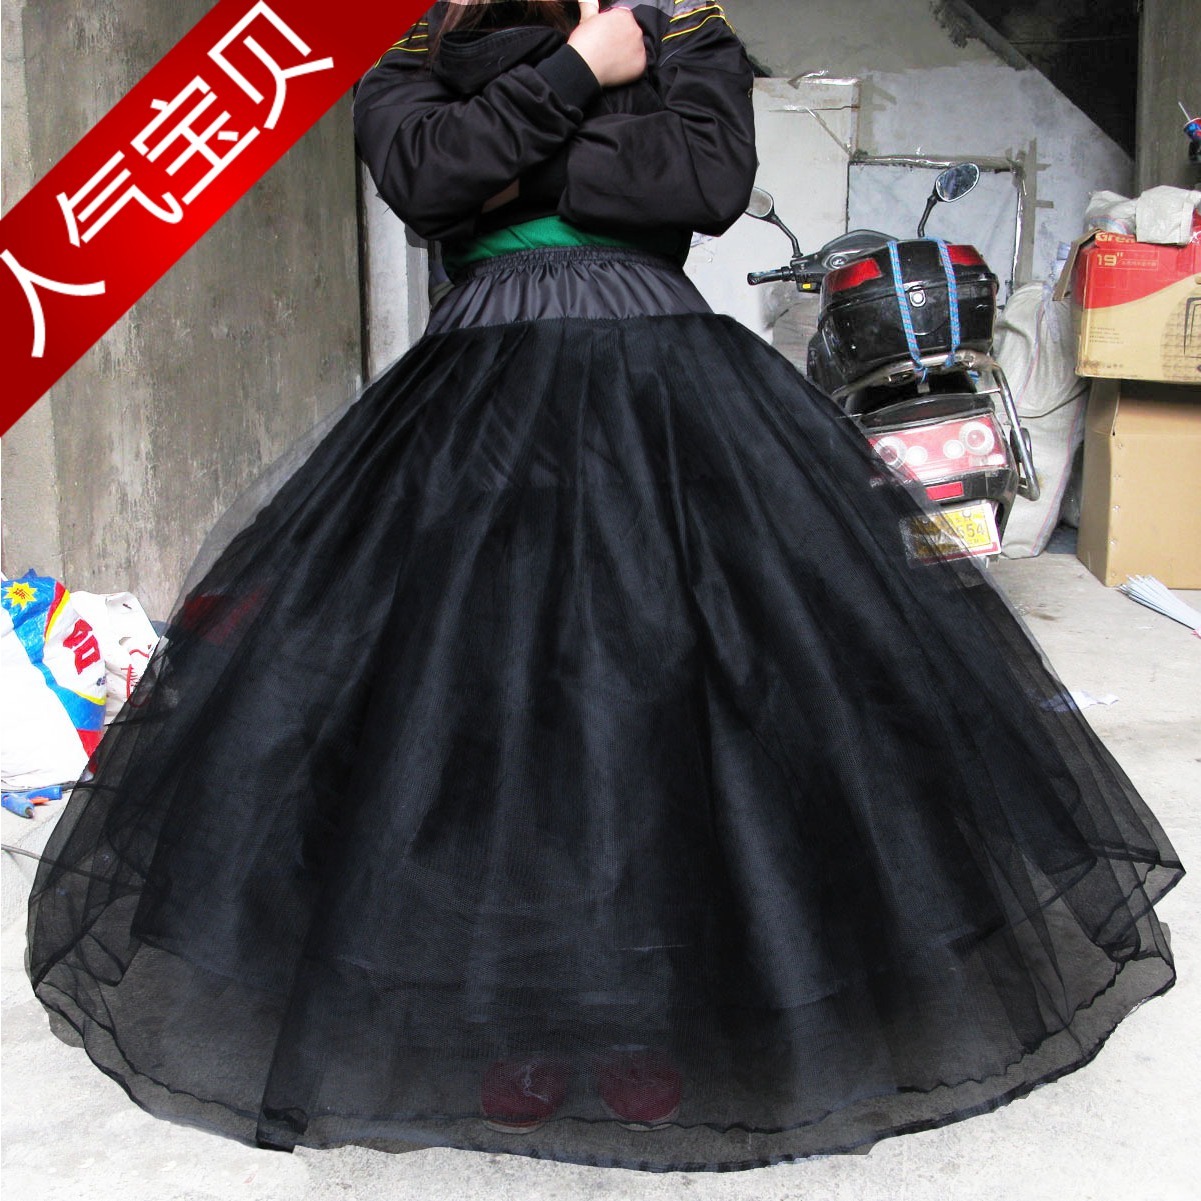 Yarn boneless skirt stretcher w06 black hard network skirt costume big skirt formal dress pannier